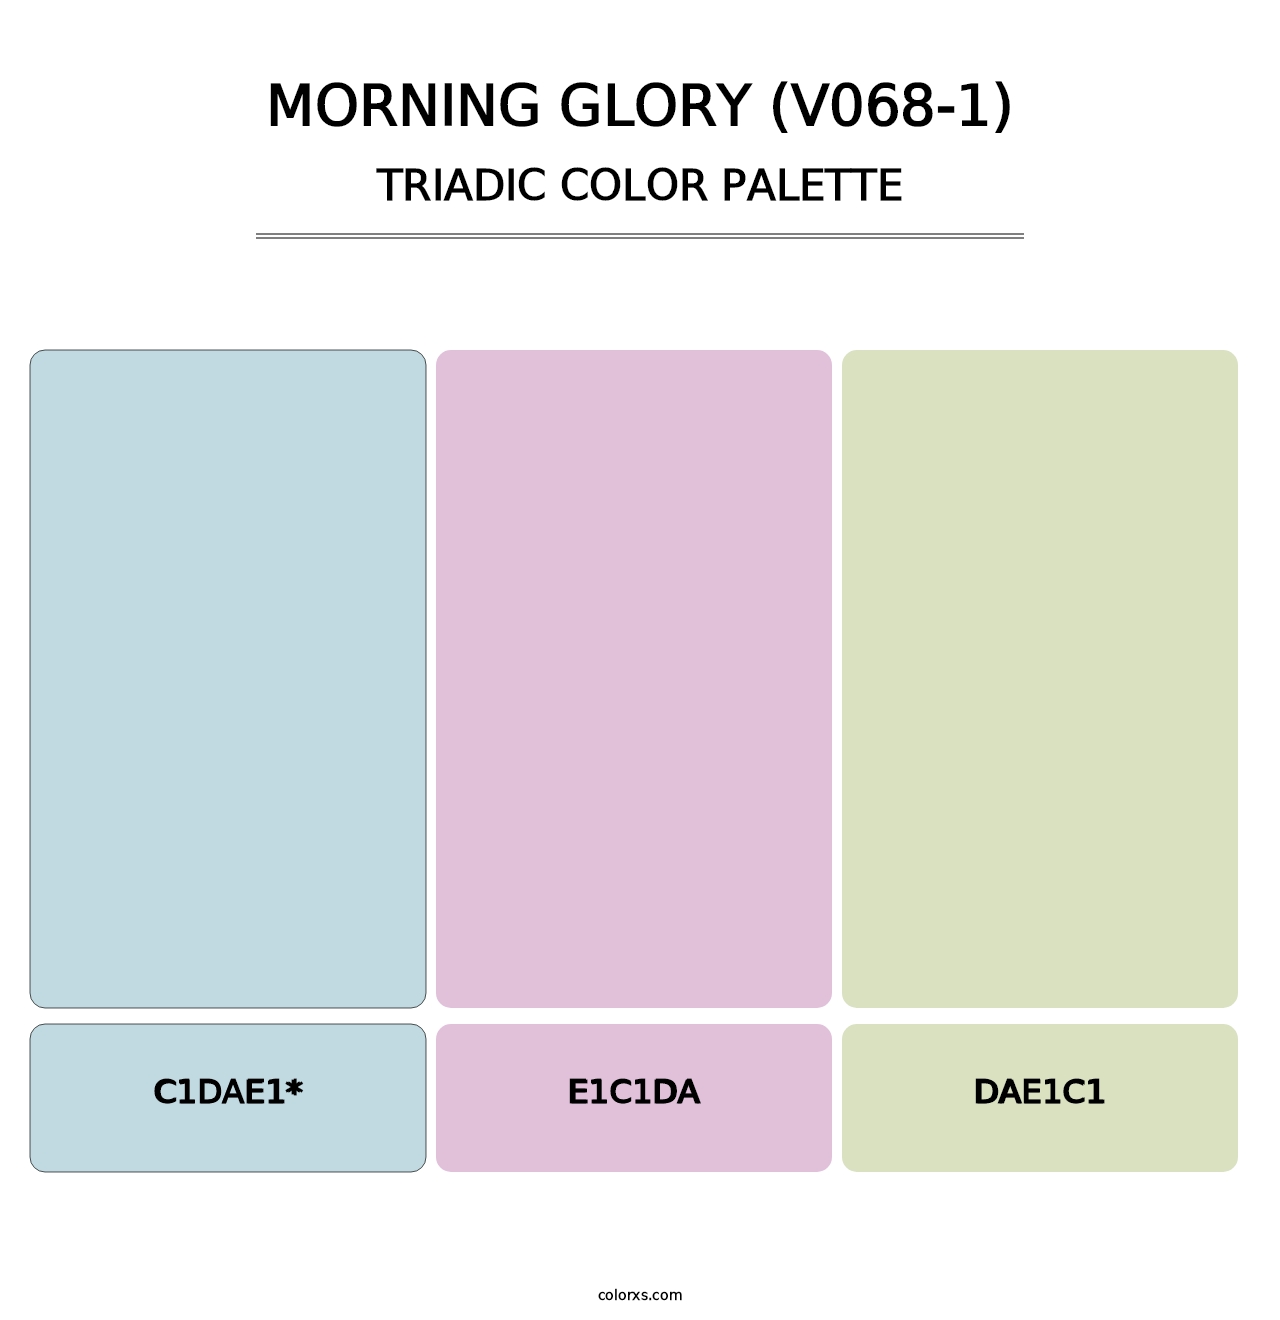 Morning Glory (V068-1) - Triadic Color Palette